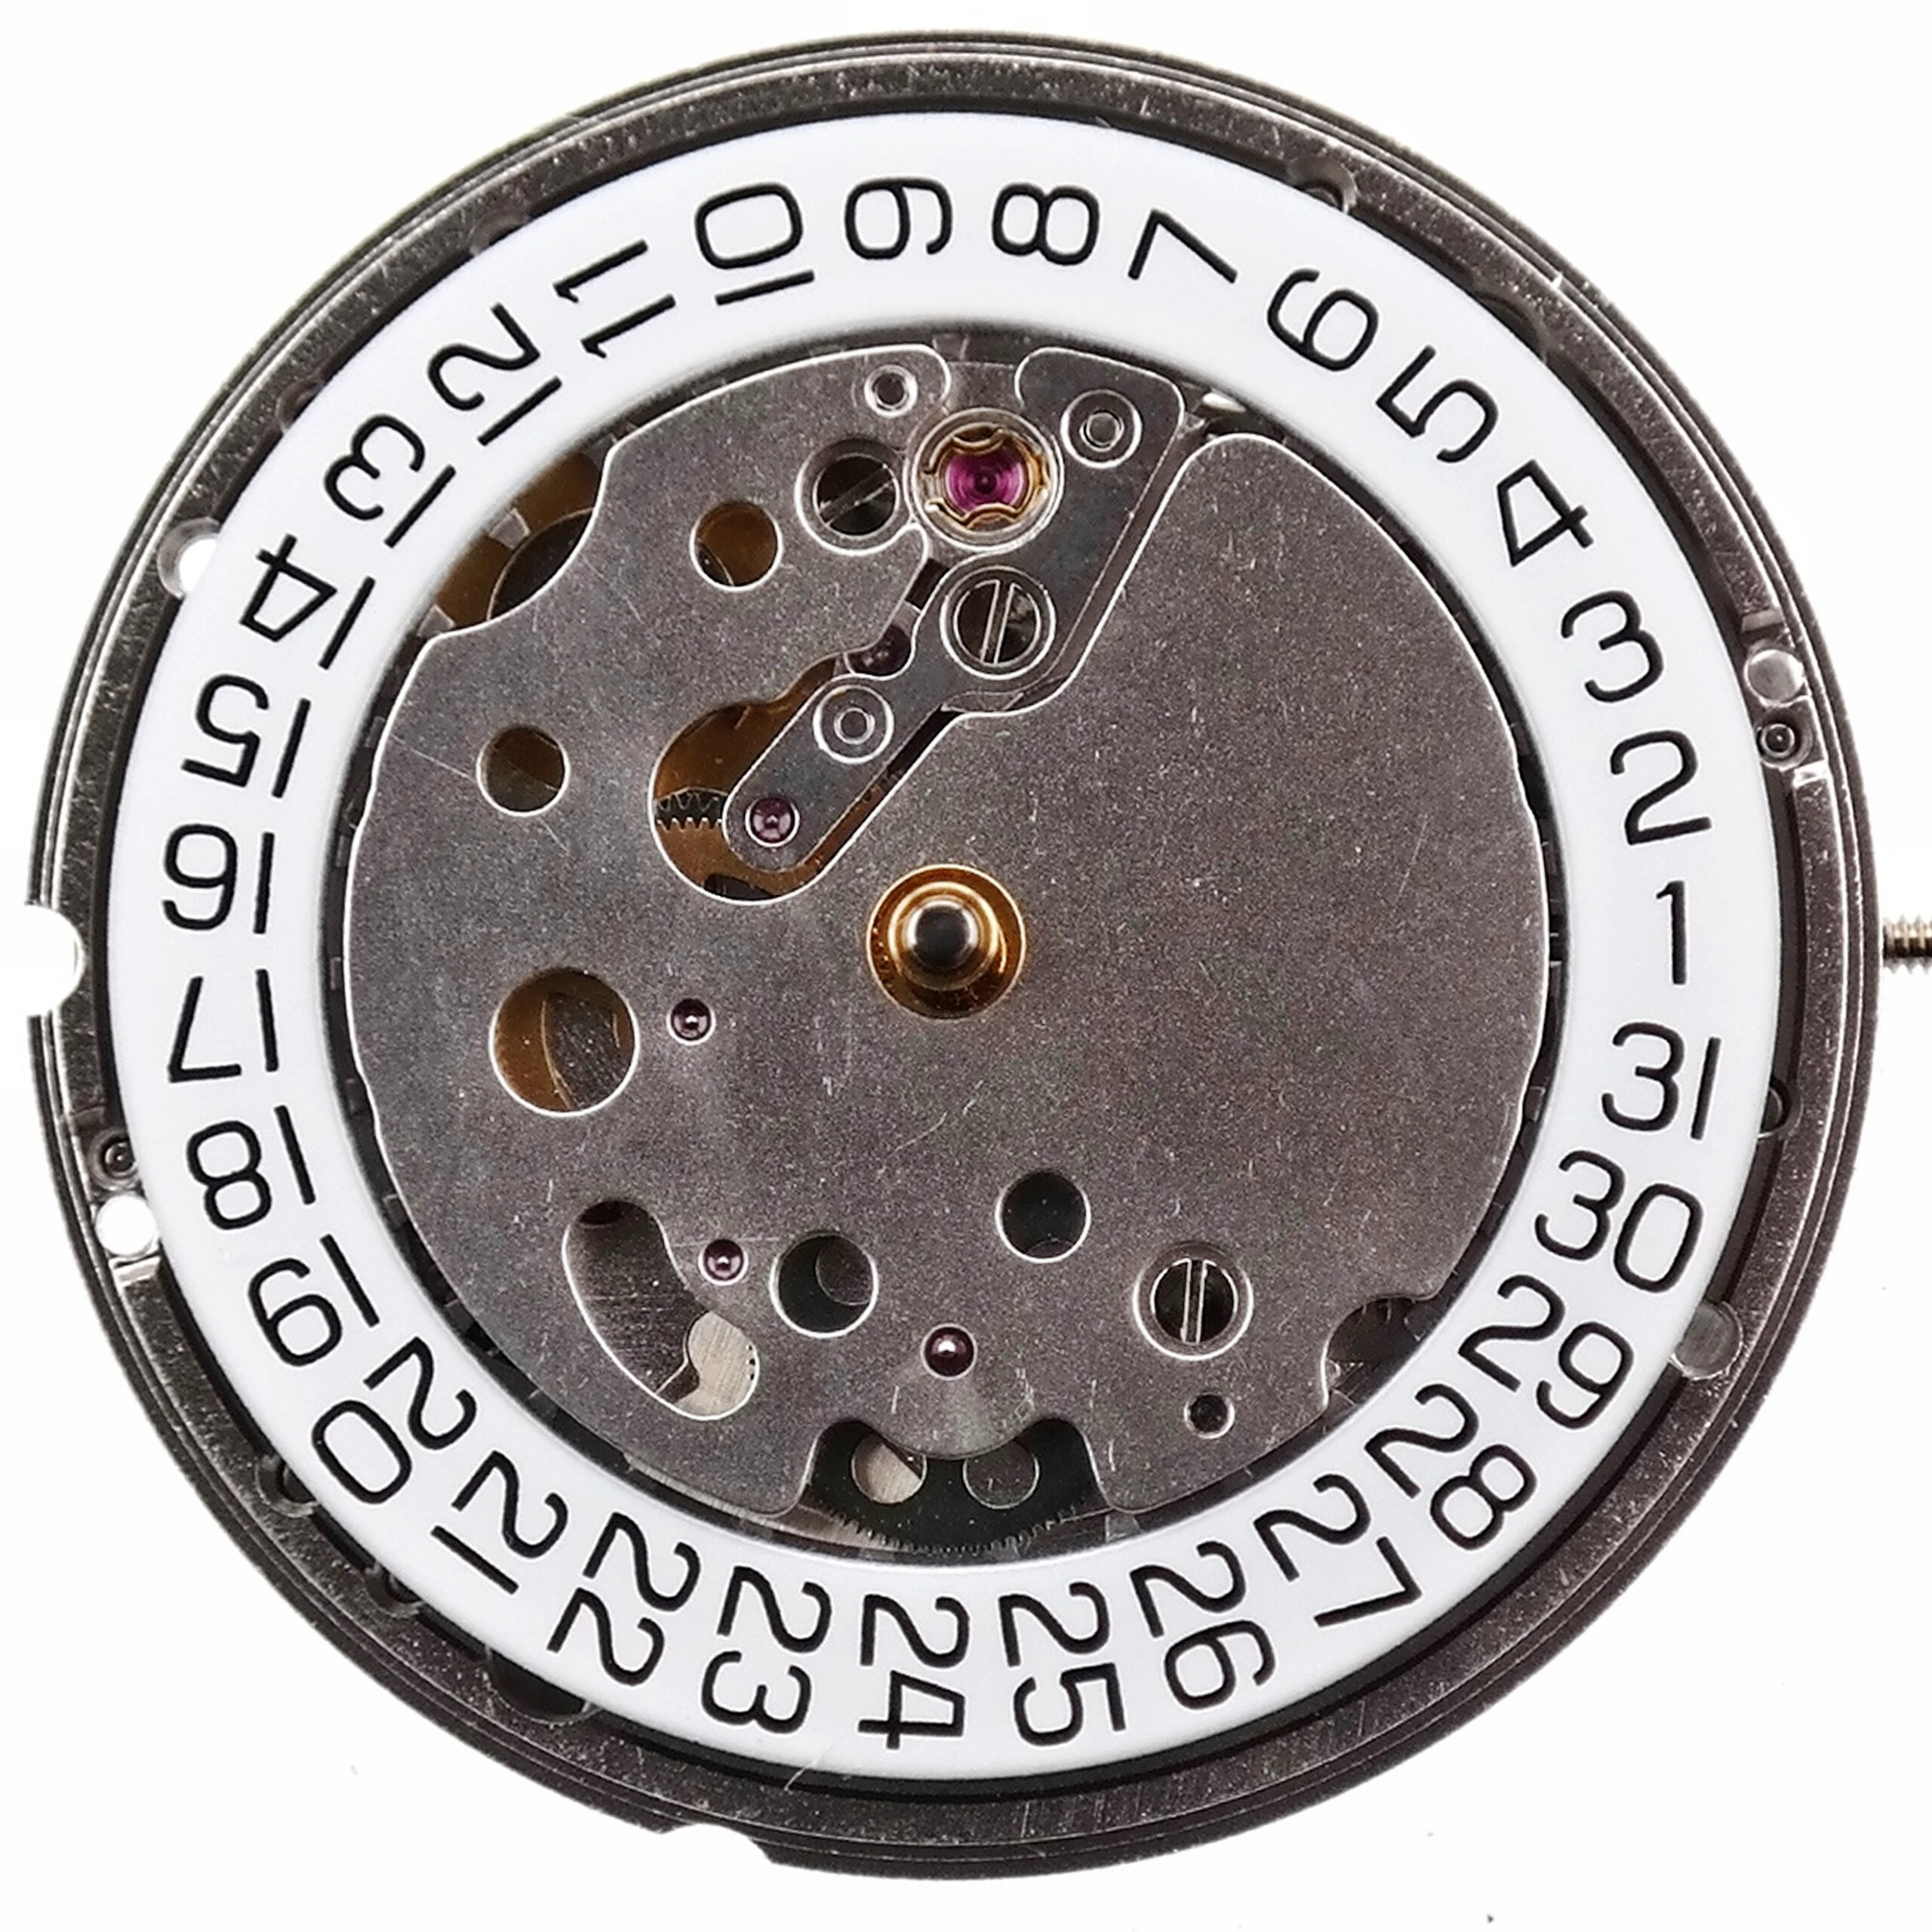 TAG Heuer - Calibre 6 - ETA 2895-2 - Automatic Watch Movement Chronometer